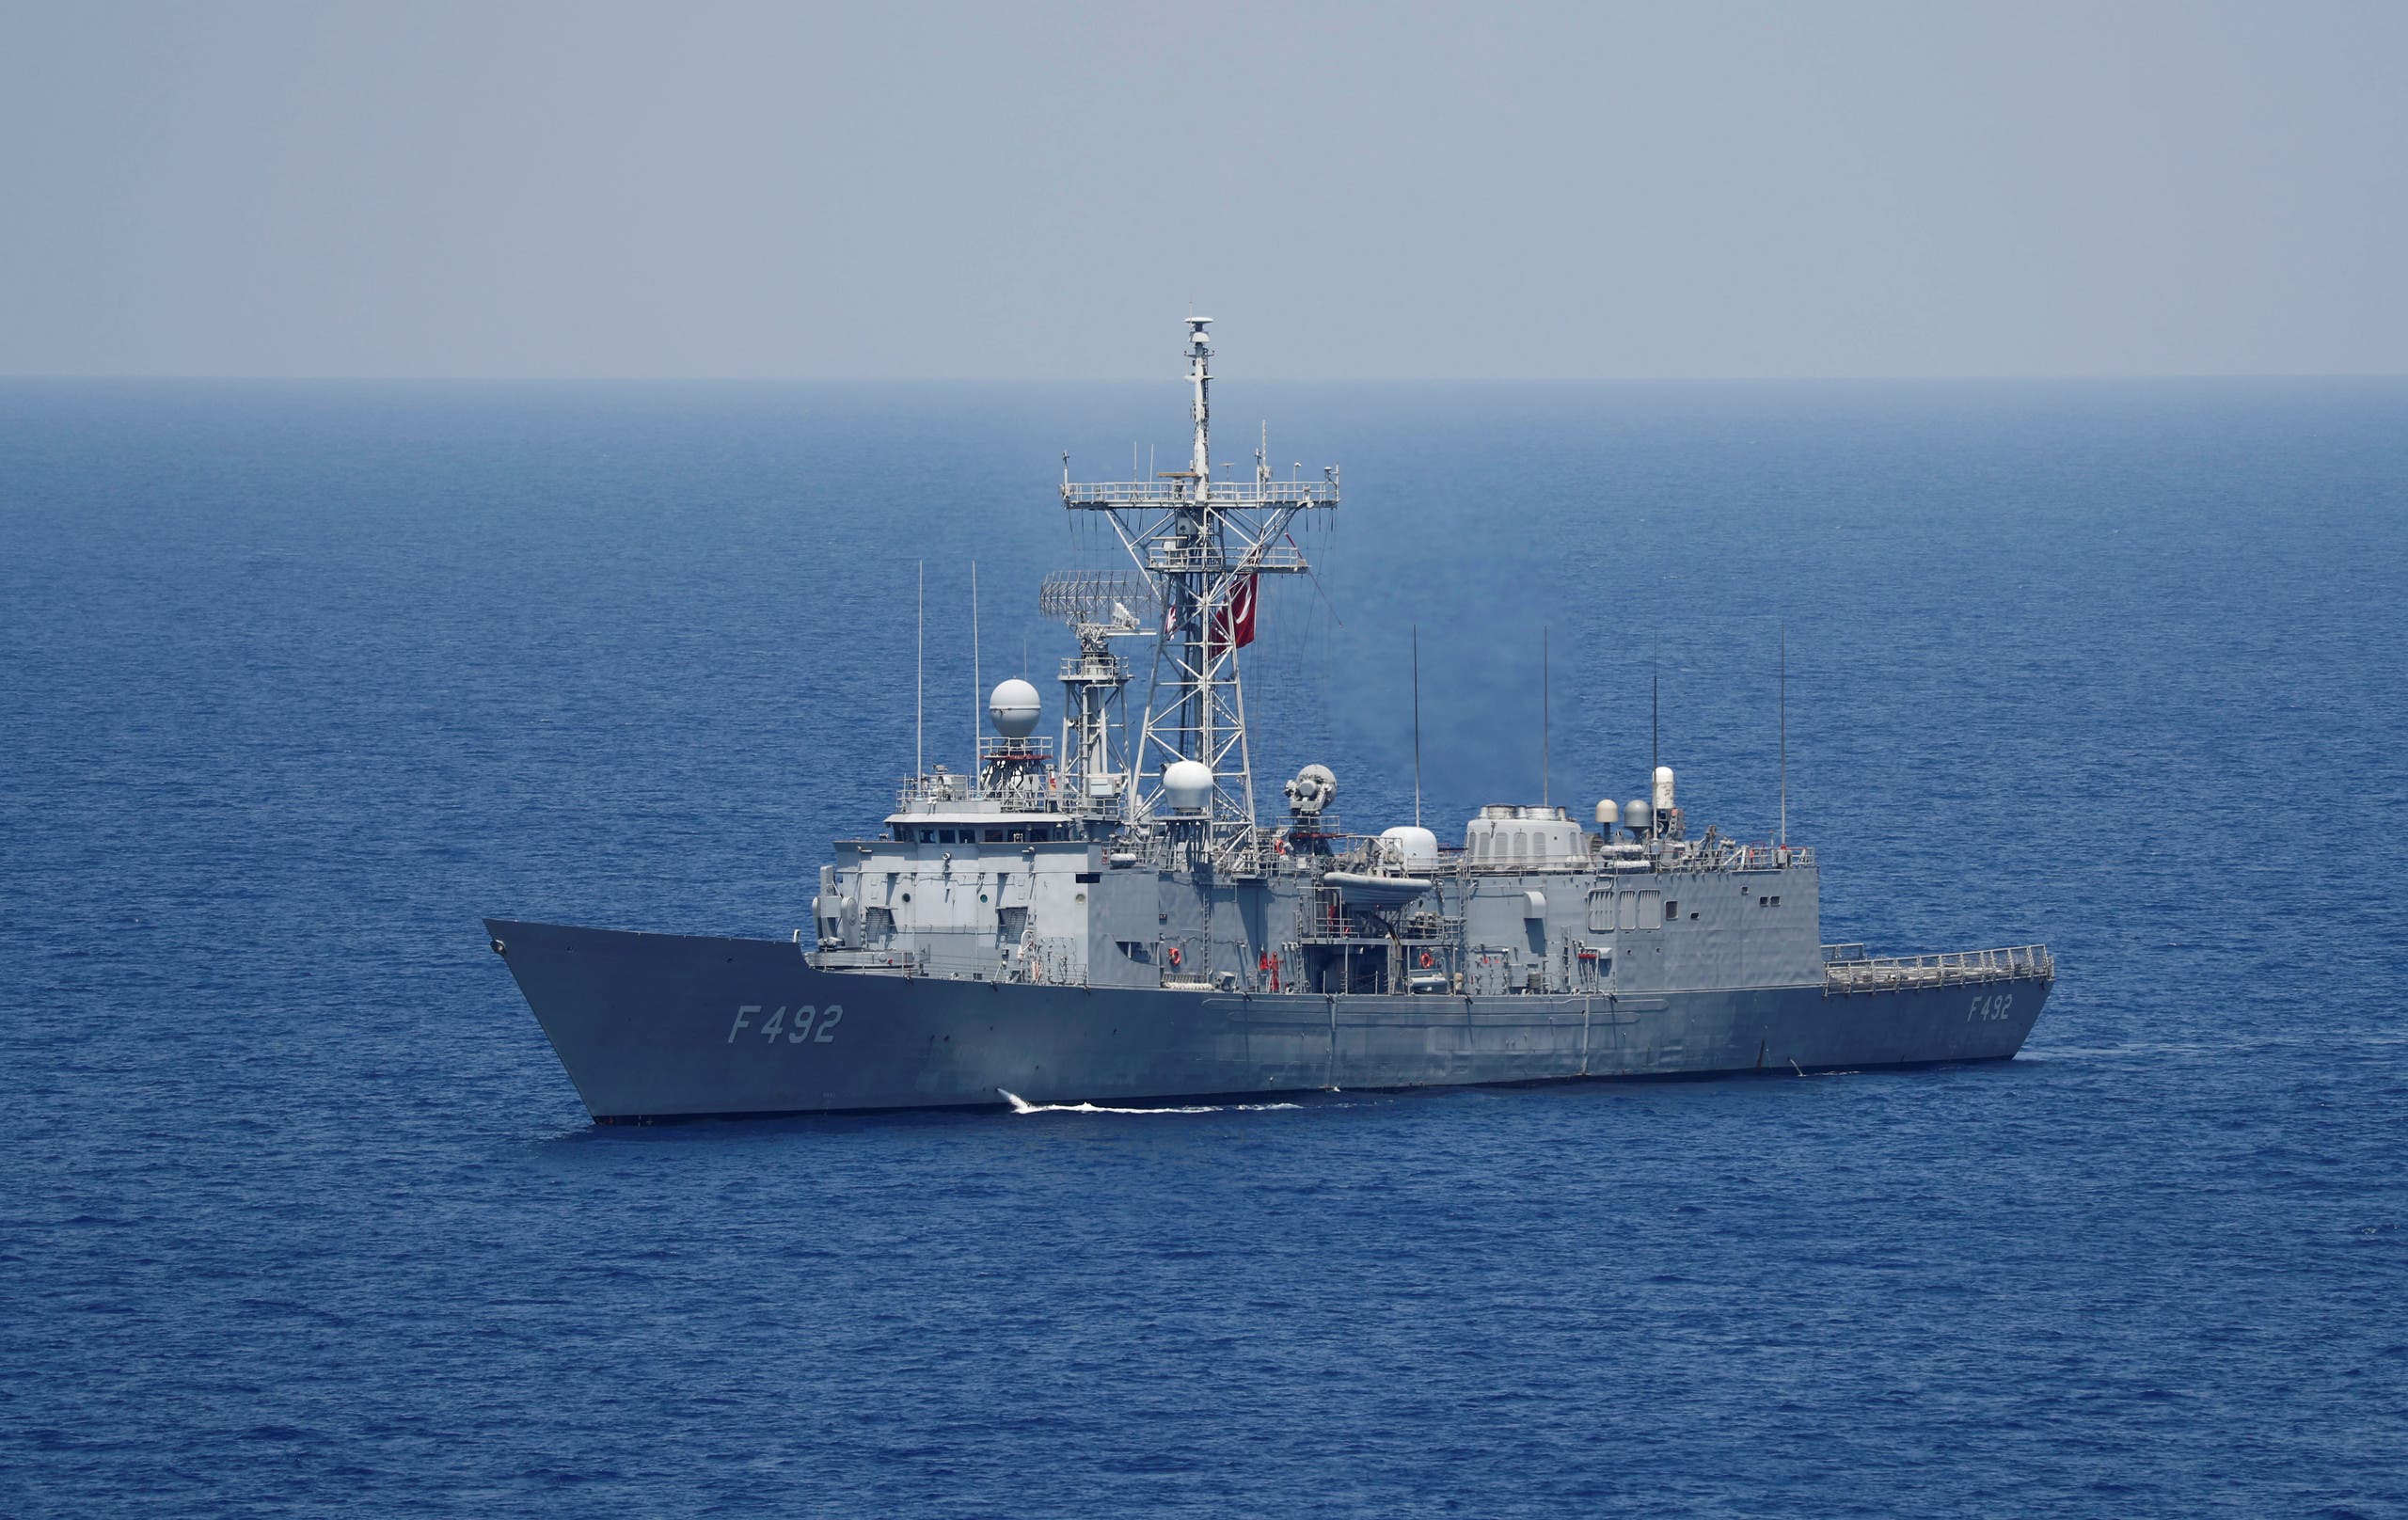 Turkish Navy frigate TCG Gemlik (F-492) escorts Turkish drilling vessel Yavuz in the eastern Mediterranean Sea off Cyprus, August 6, 2019. Picture taken August 6, 2019. (Reuters)